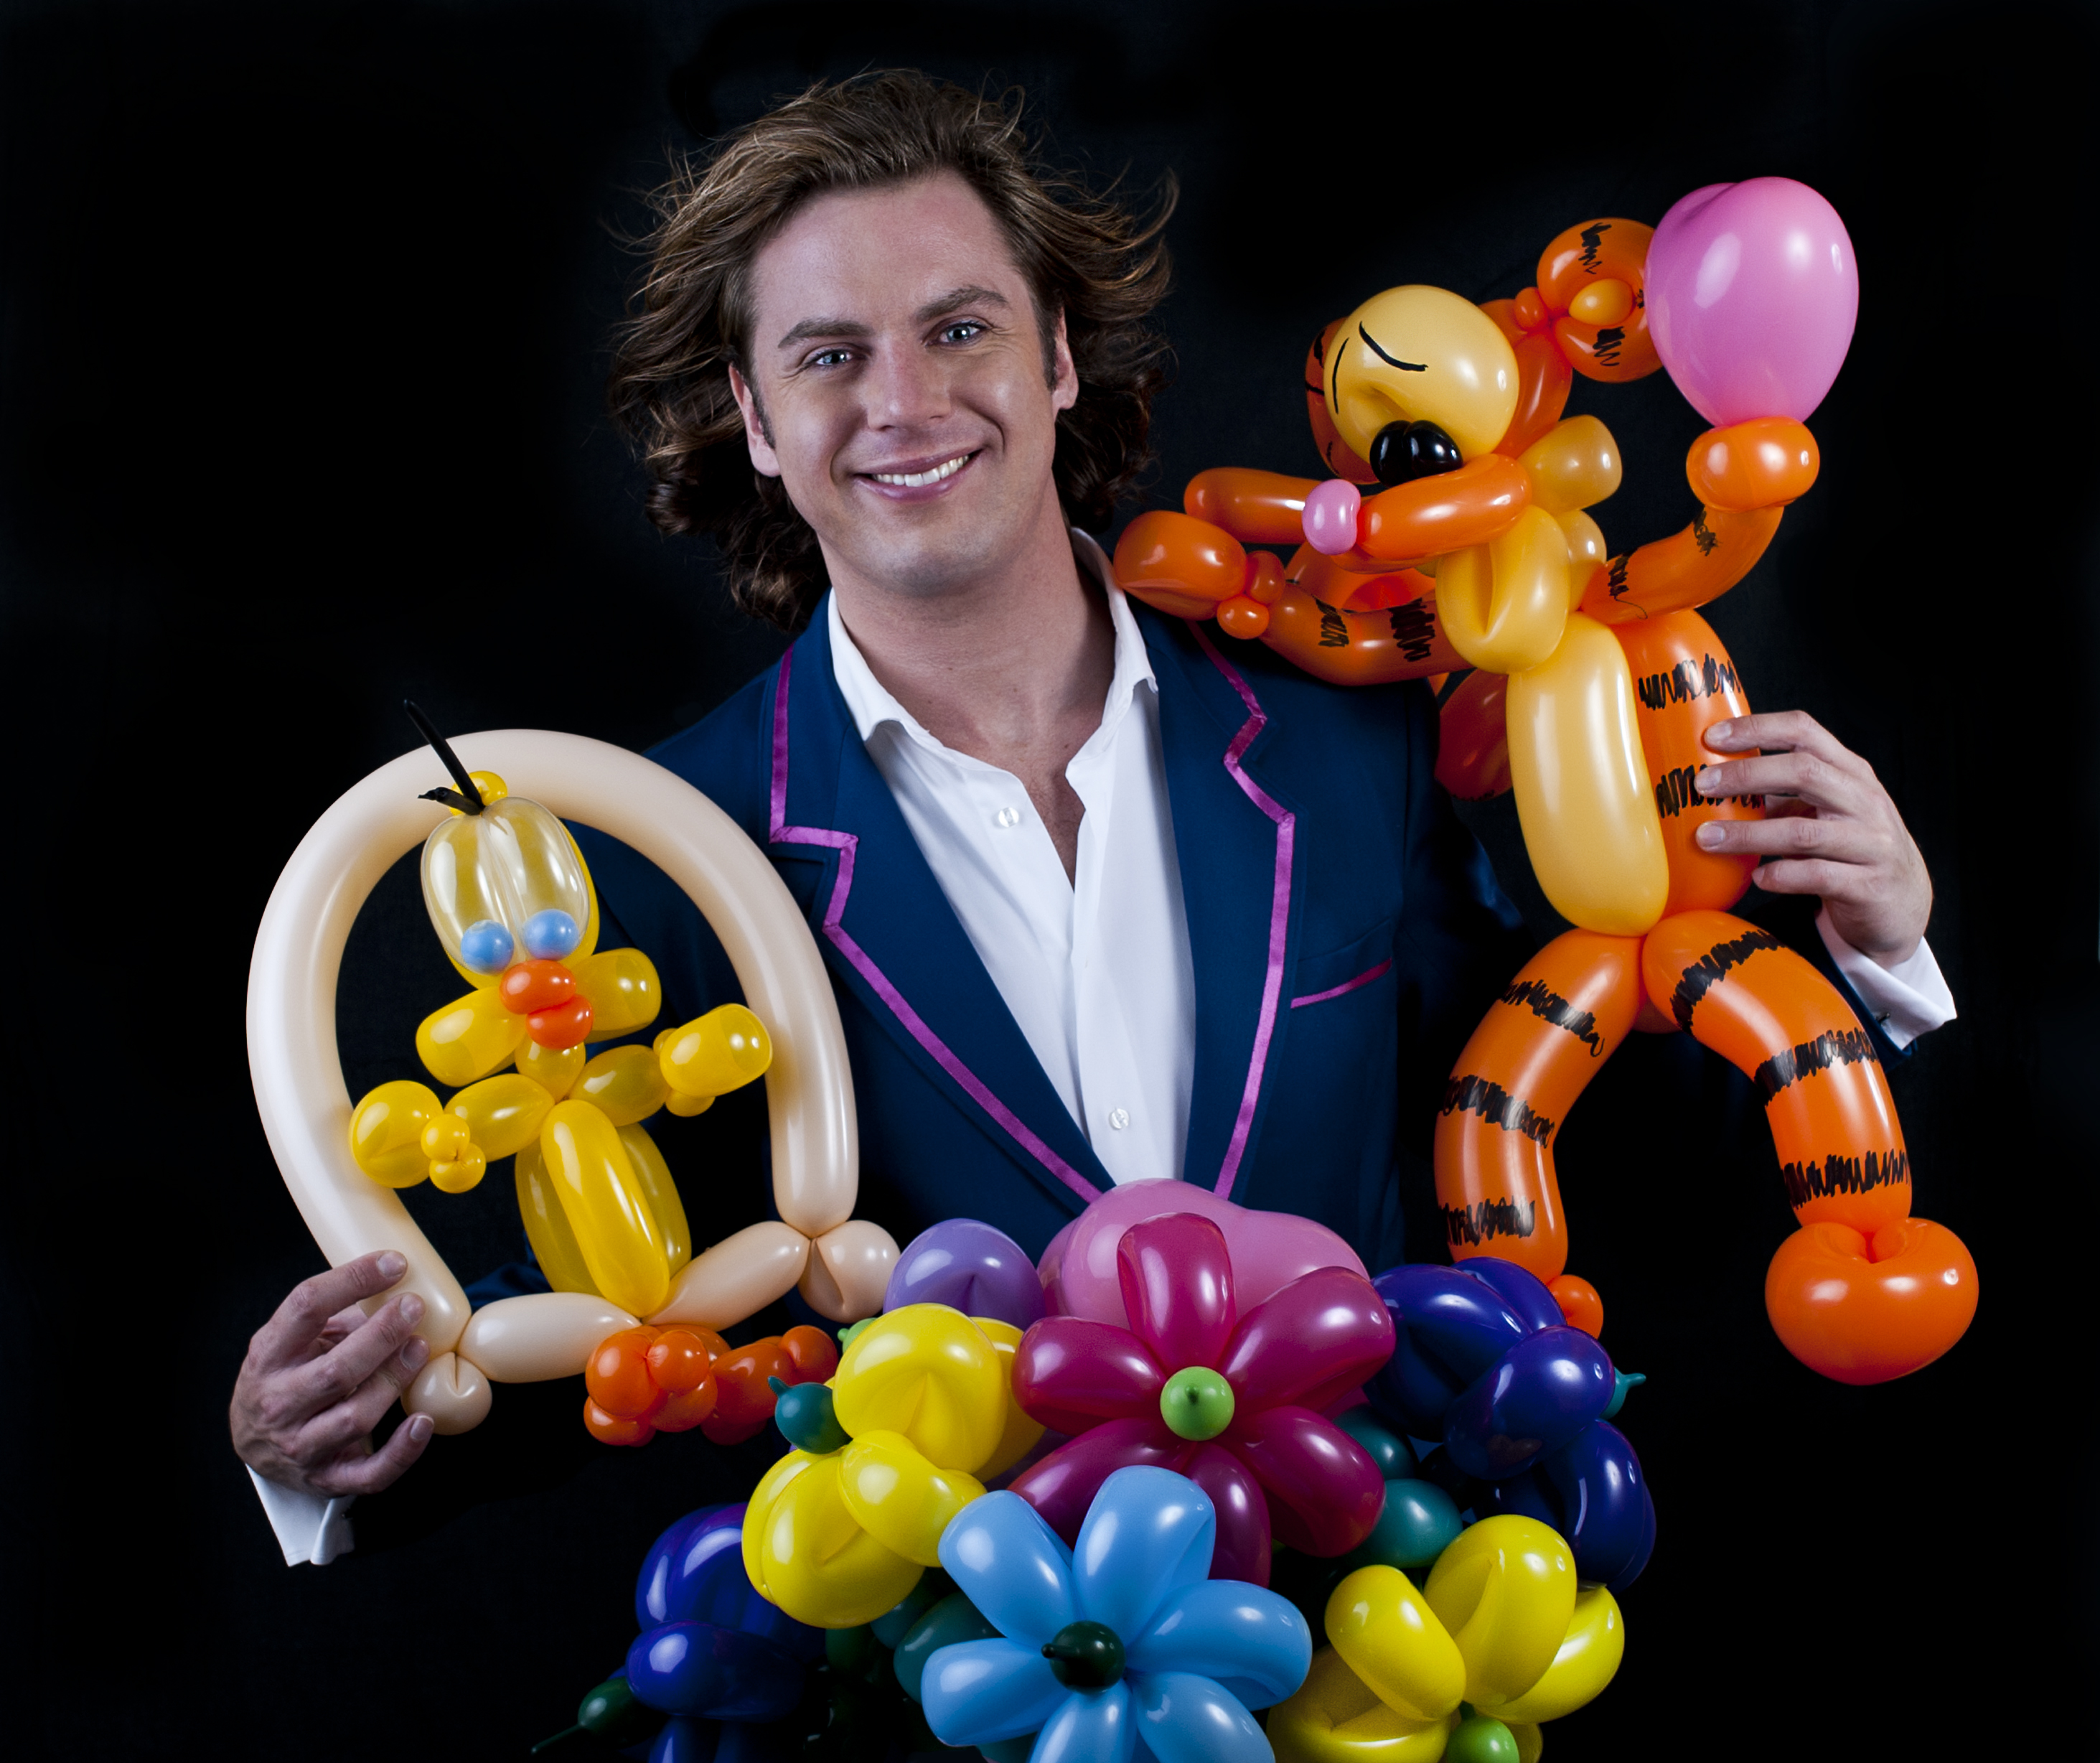 ballooning door ballonartiest Martijn Martell